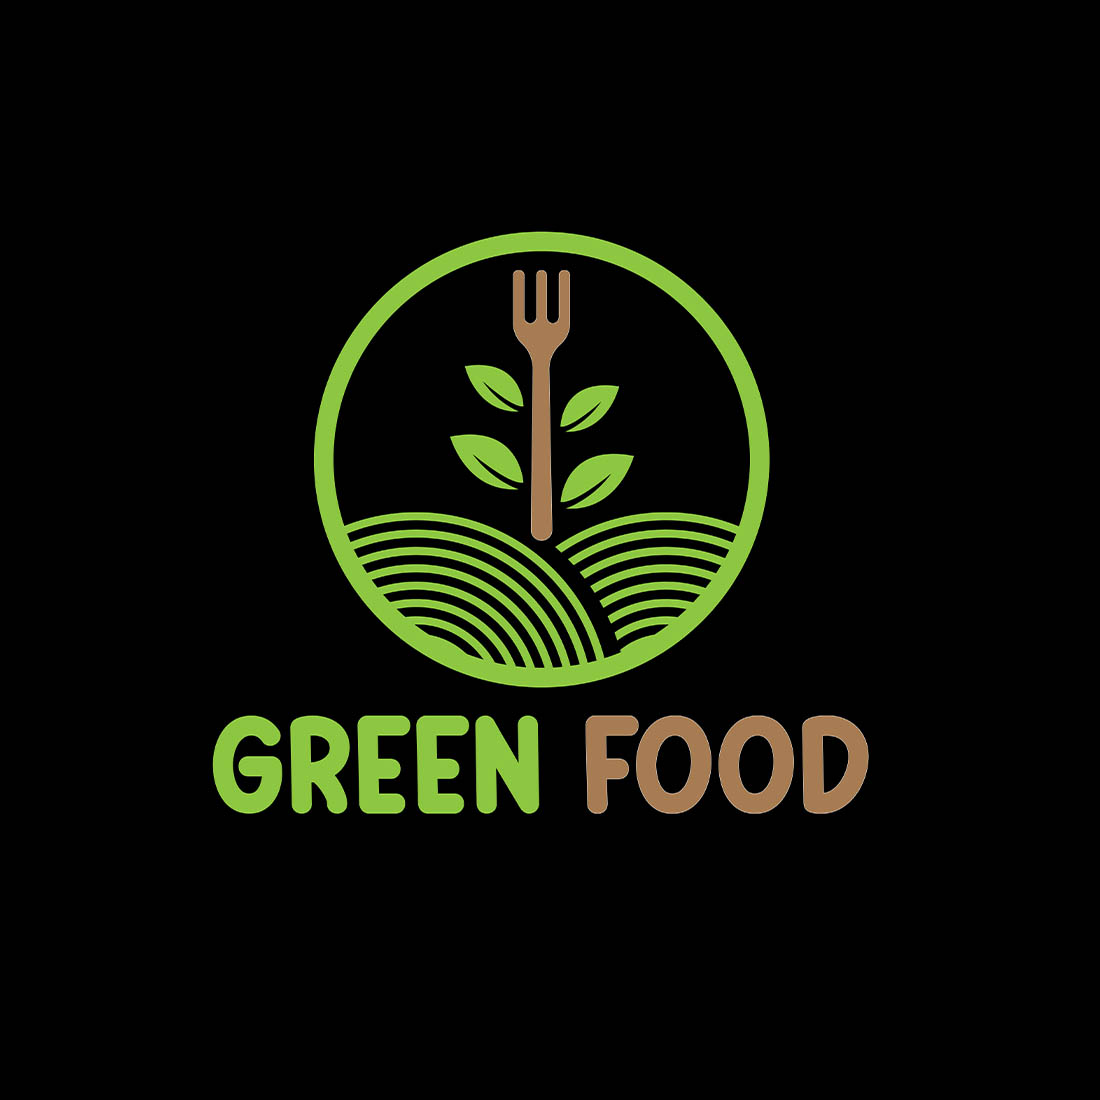 Premium Green Food Logo Design Kit - 100% Editable Vector Templates preview image.